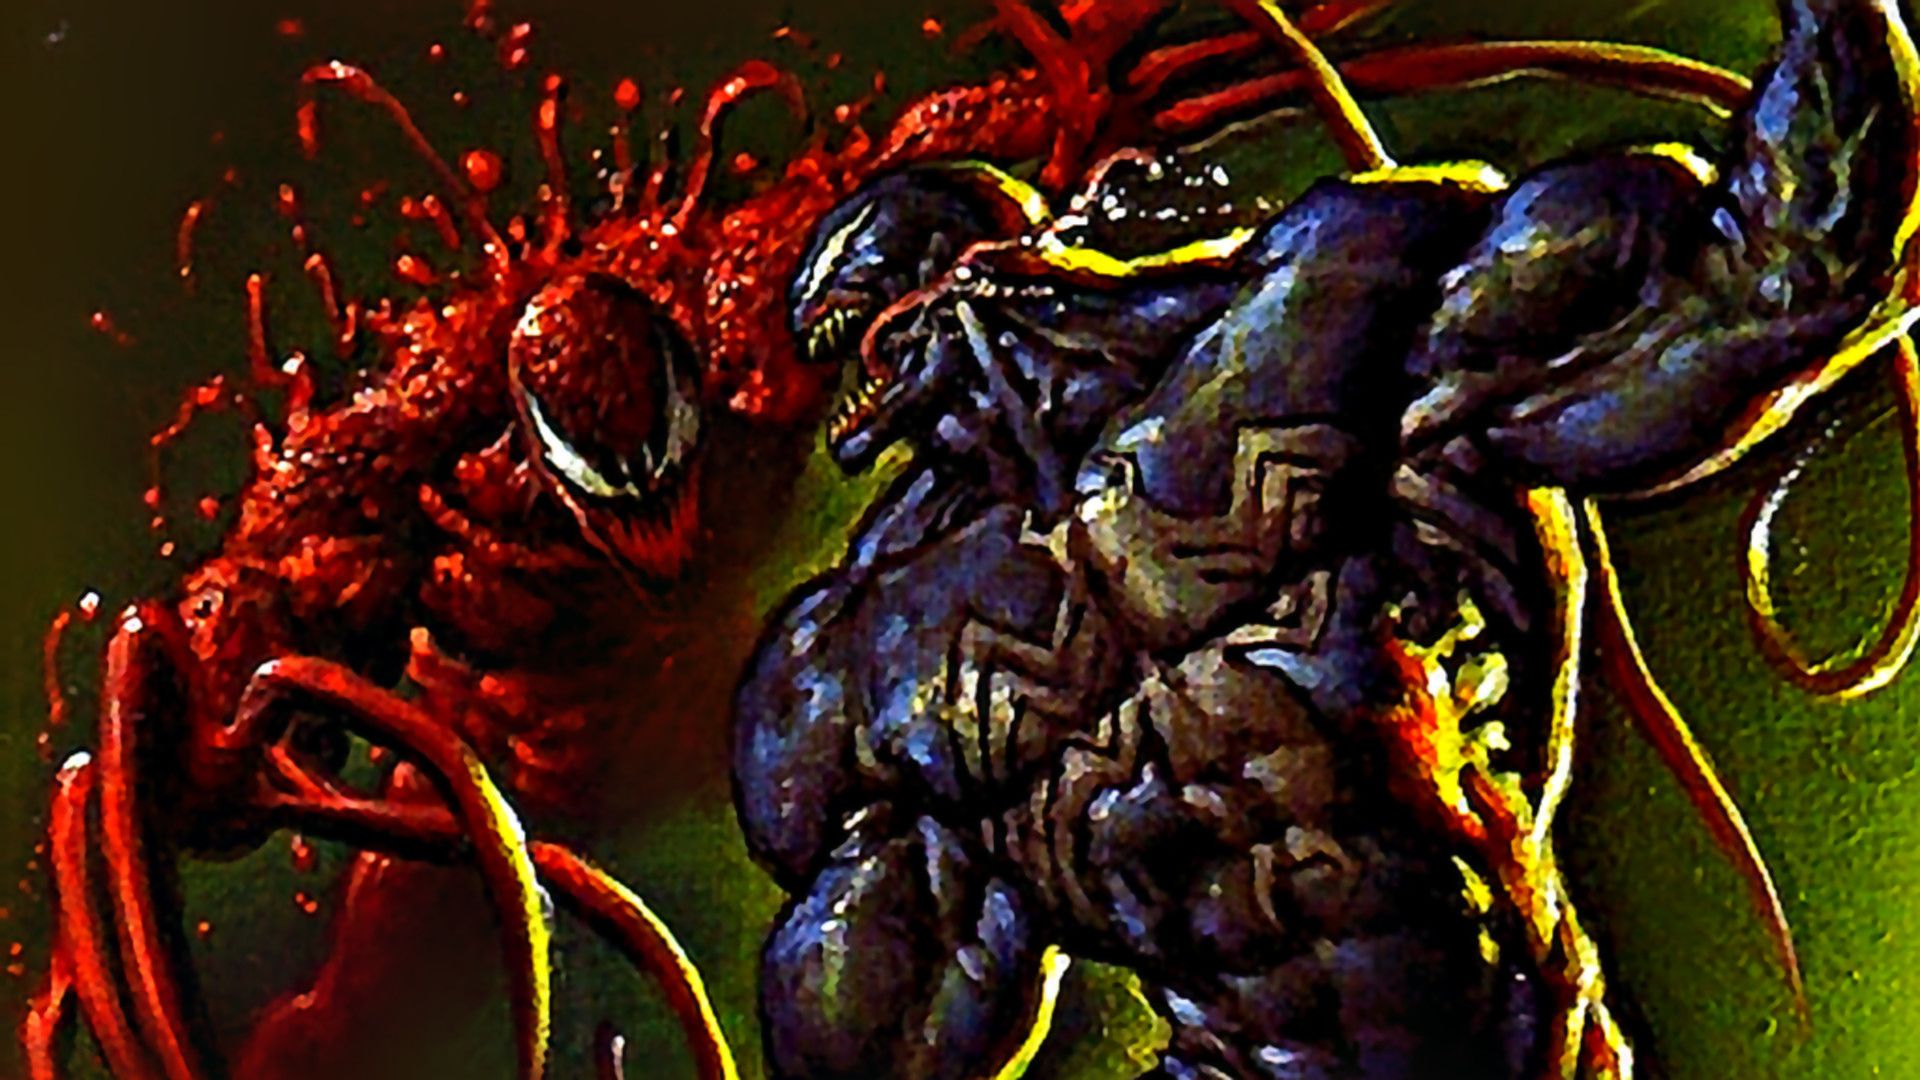 Carnage Vs Venom Wallpaper background picture